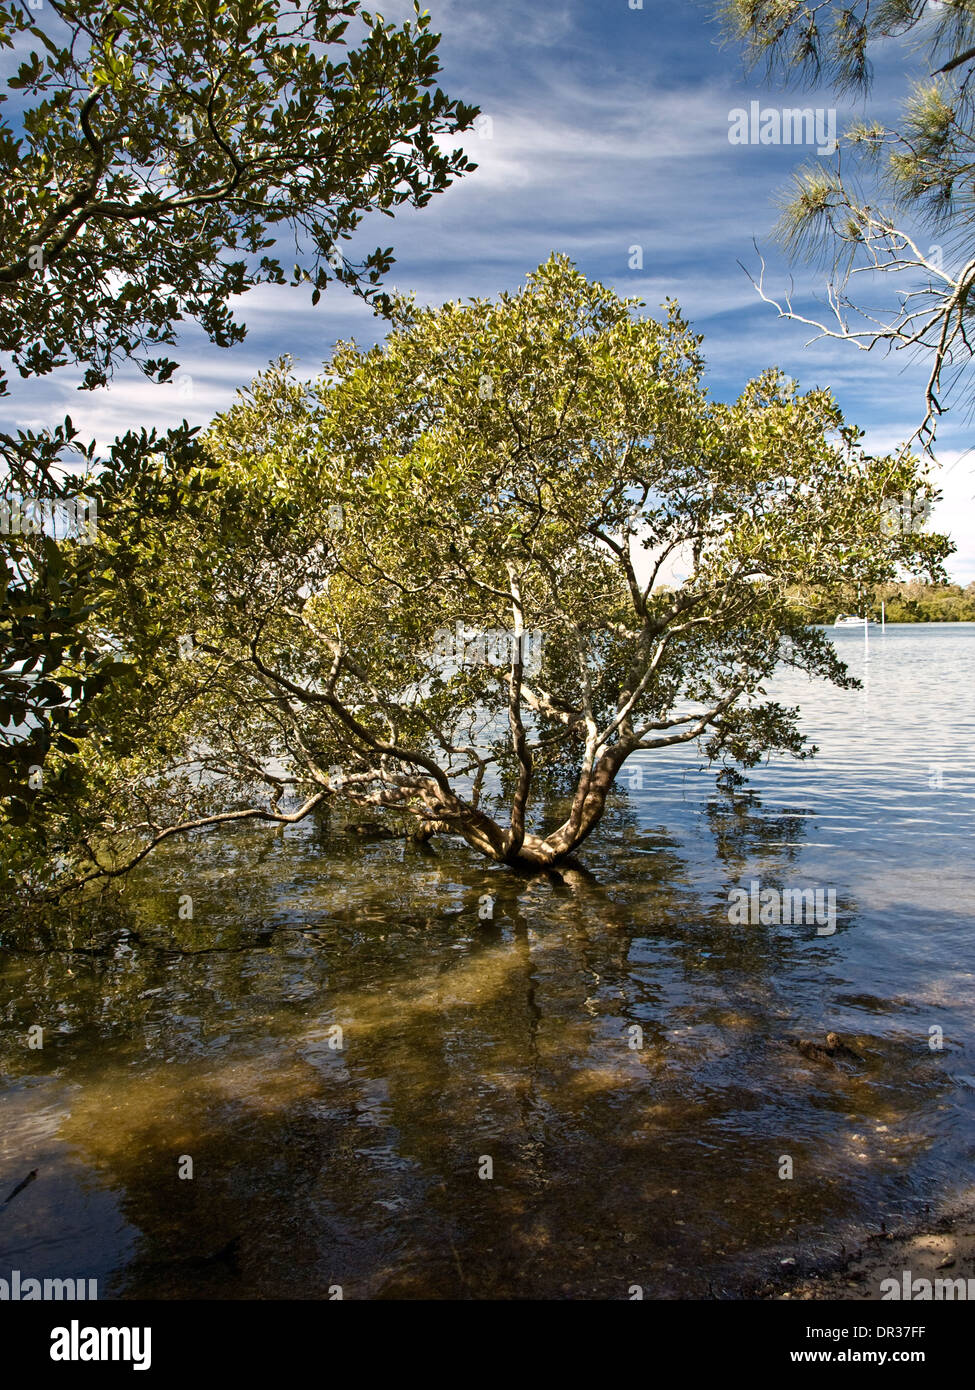 Mangrovie (Avicennia marina), Lemon Tree passaggio, Port Stephens, NSW, Australia Foto Stock